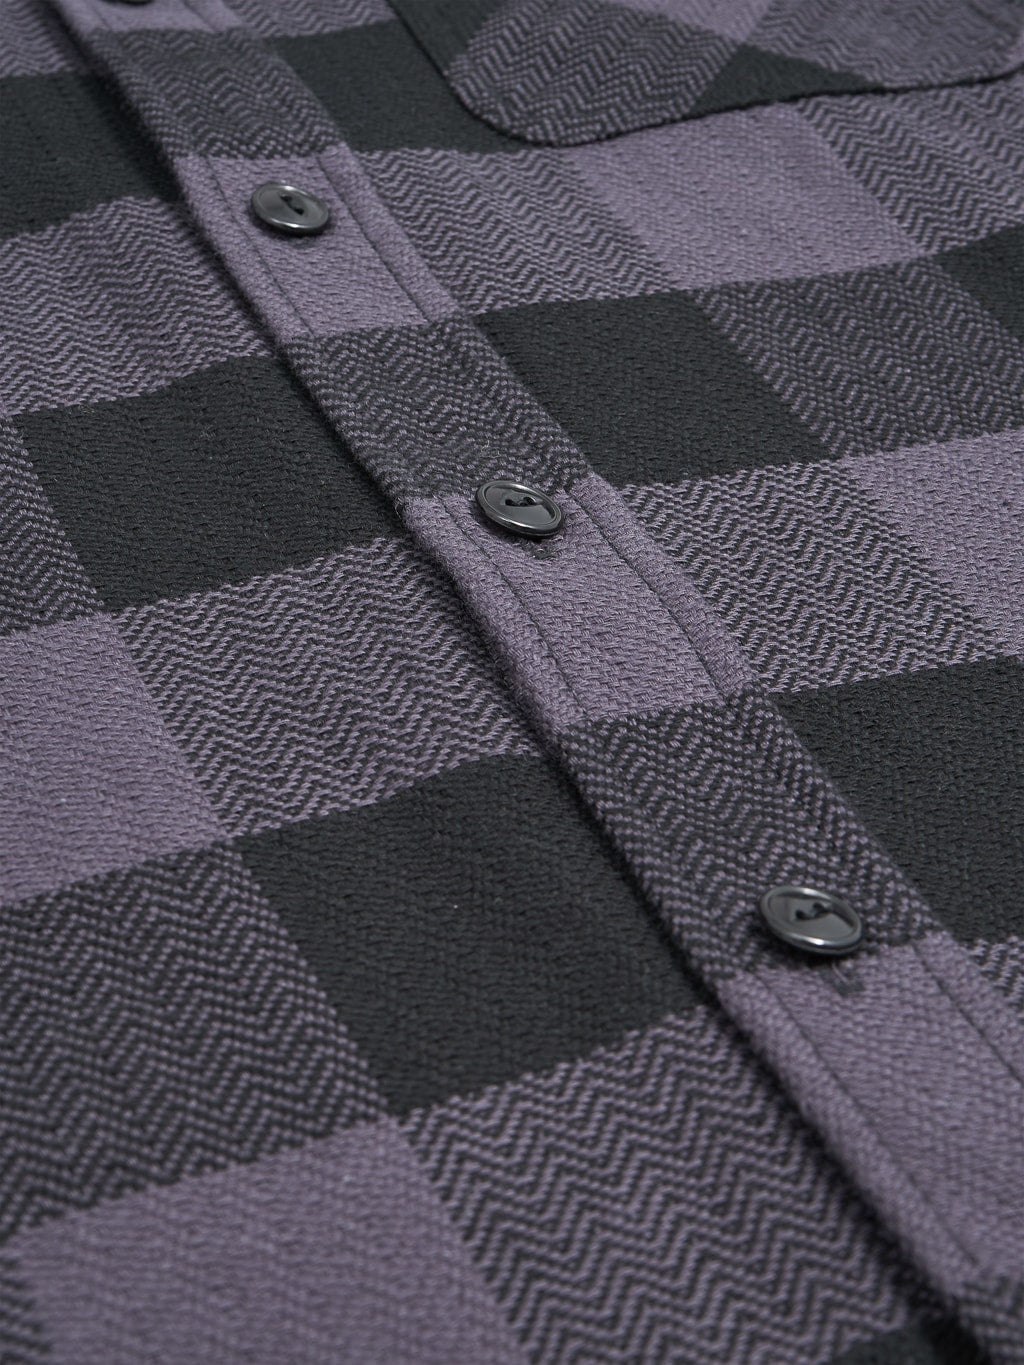 The Flat Head Block Check Flannel Shirt Grey/Black